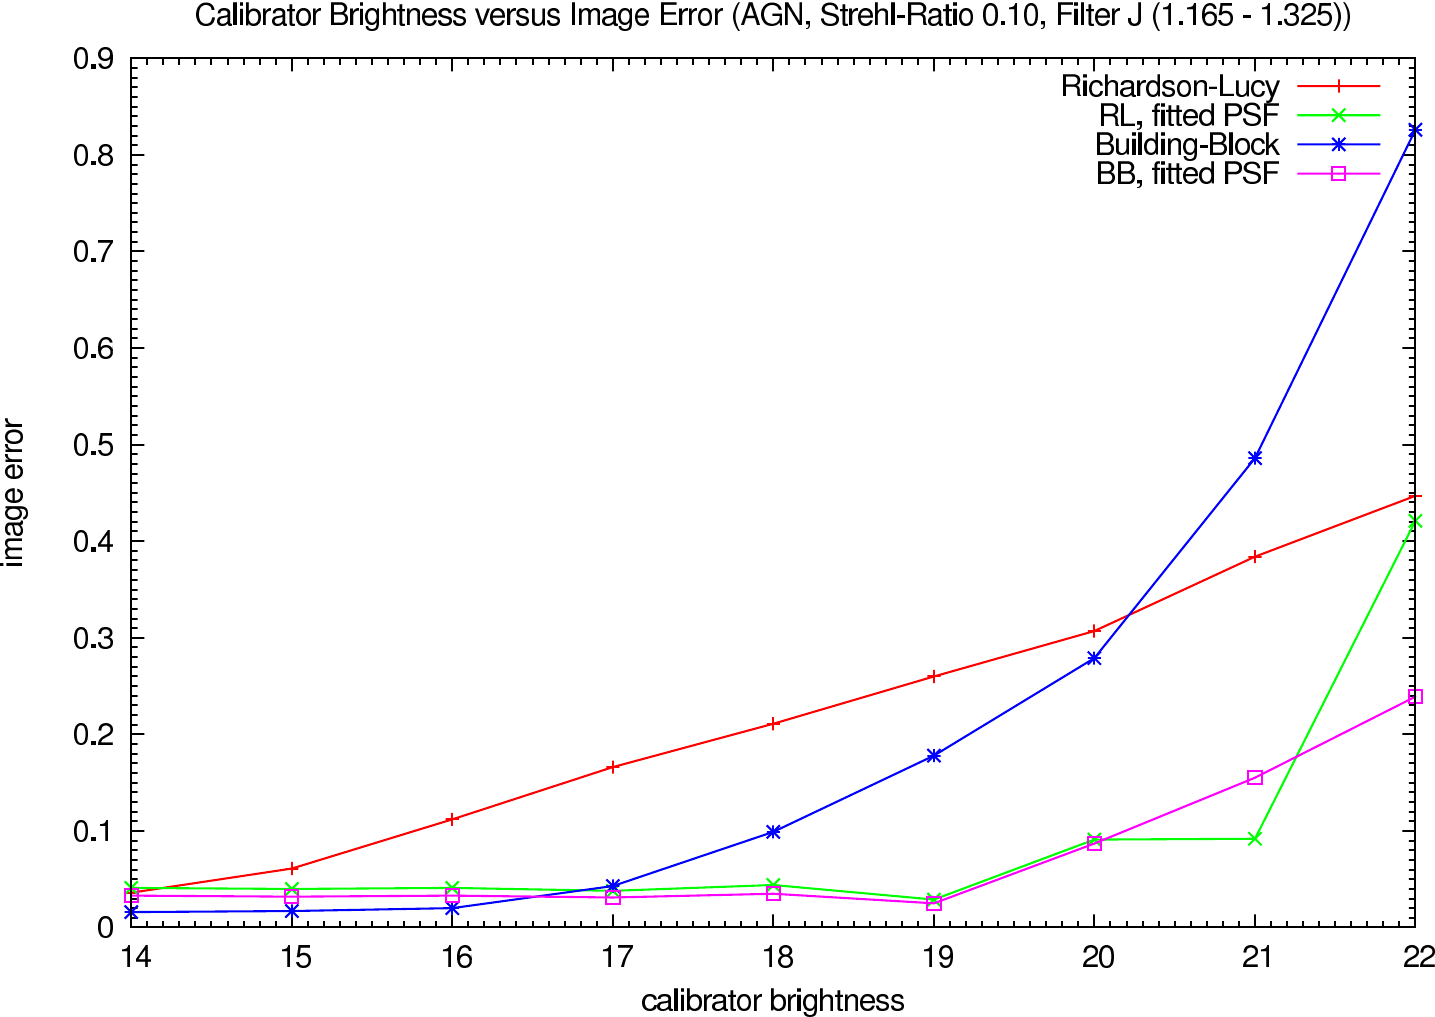 Image errors depending on the calibrator brightness, strehl ratio 0.10, J-Band